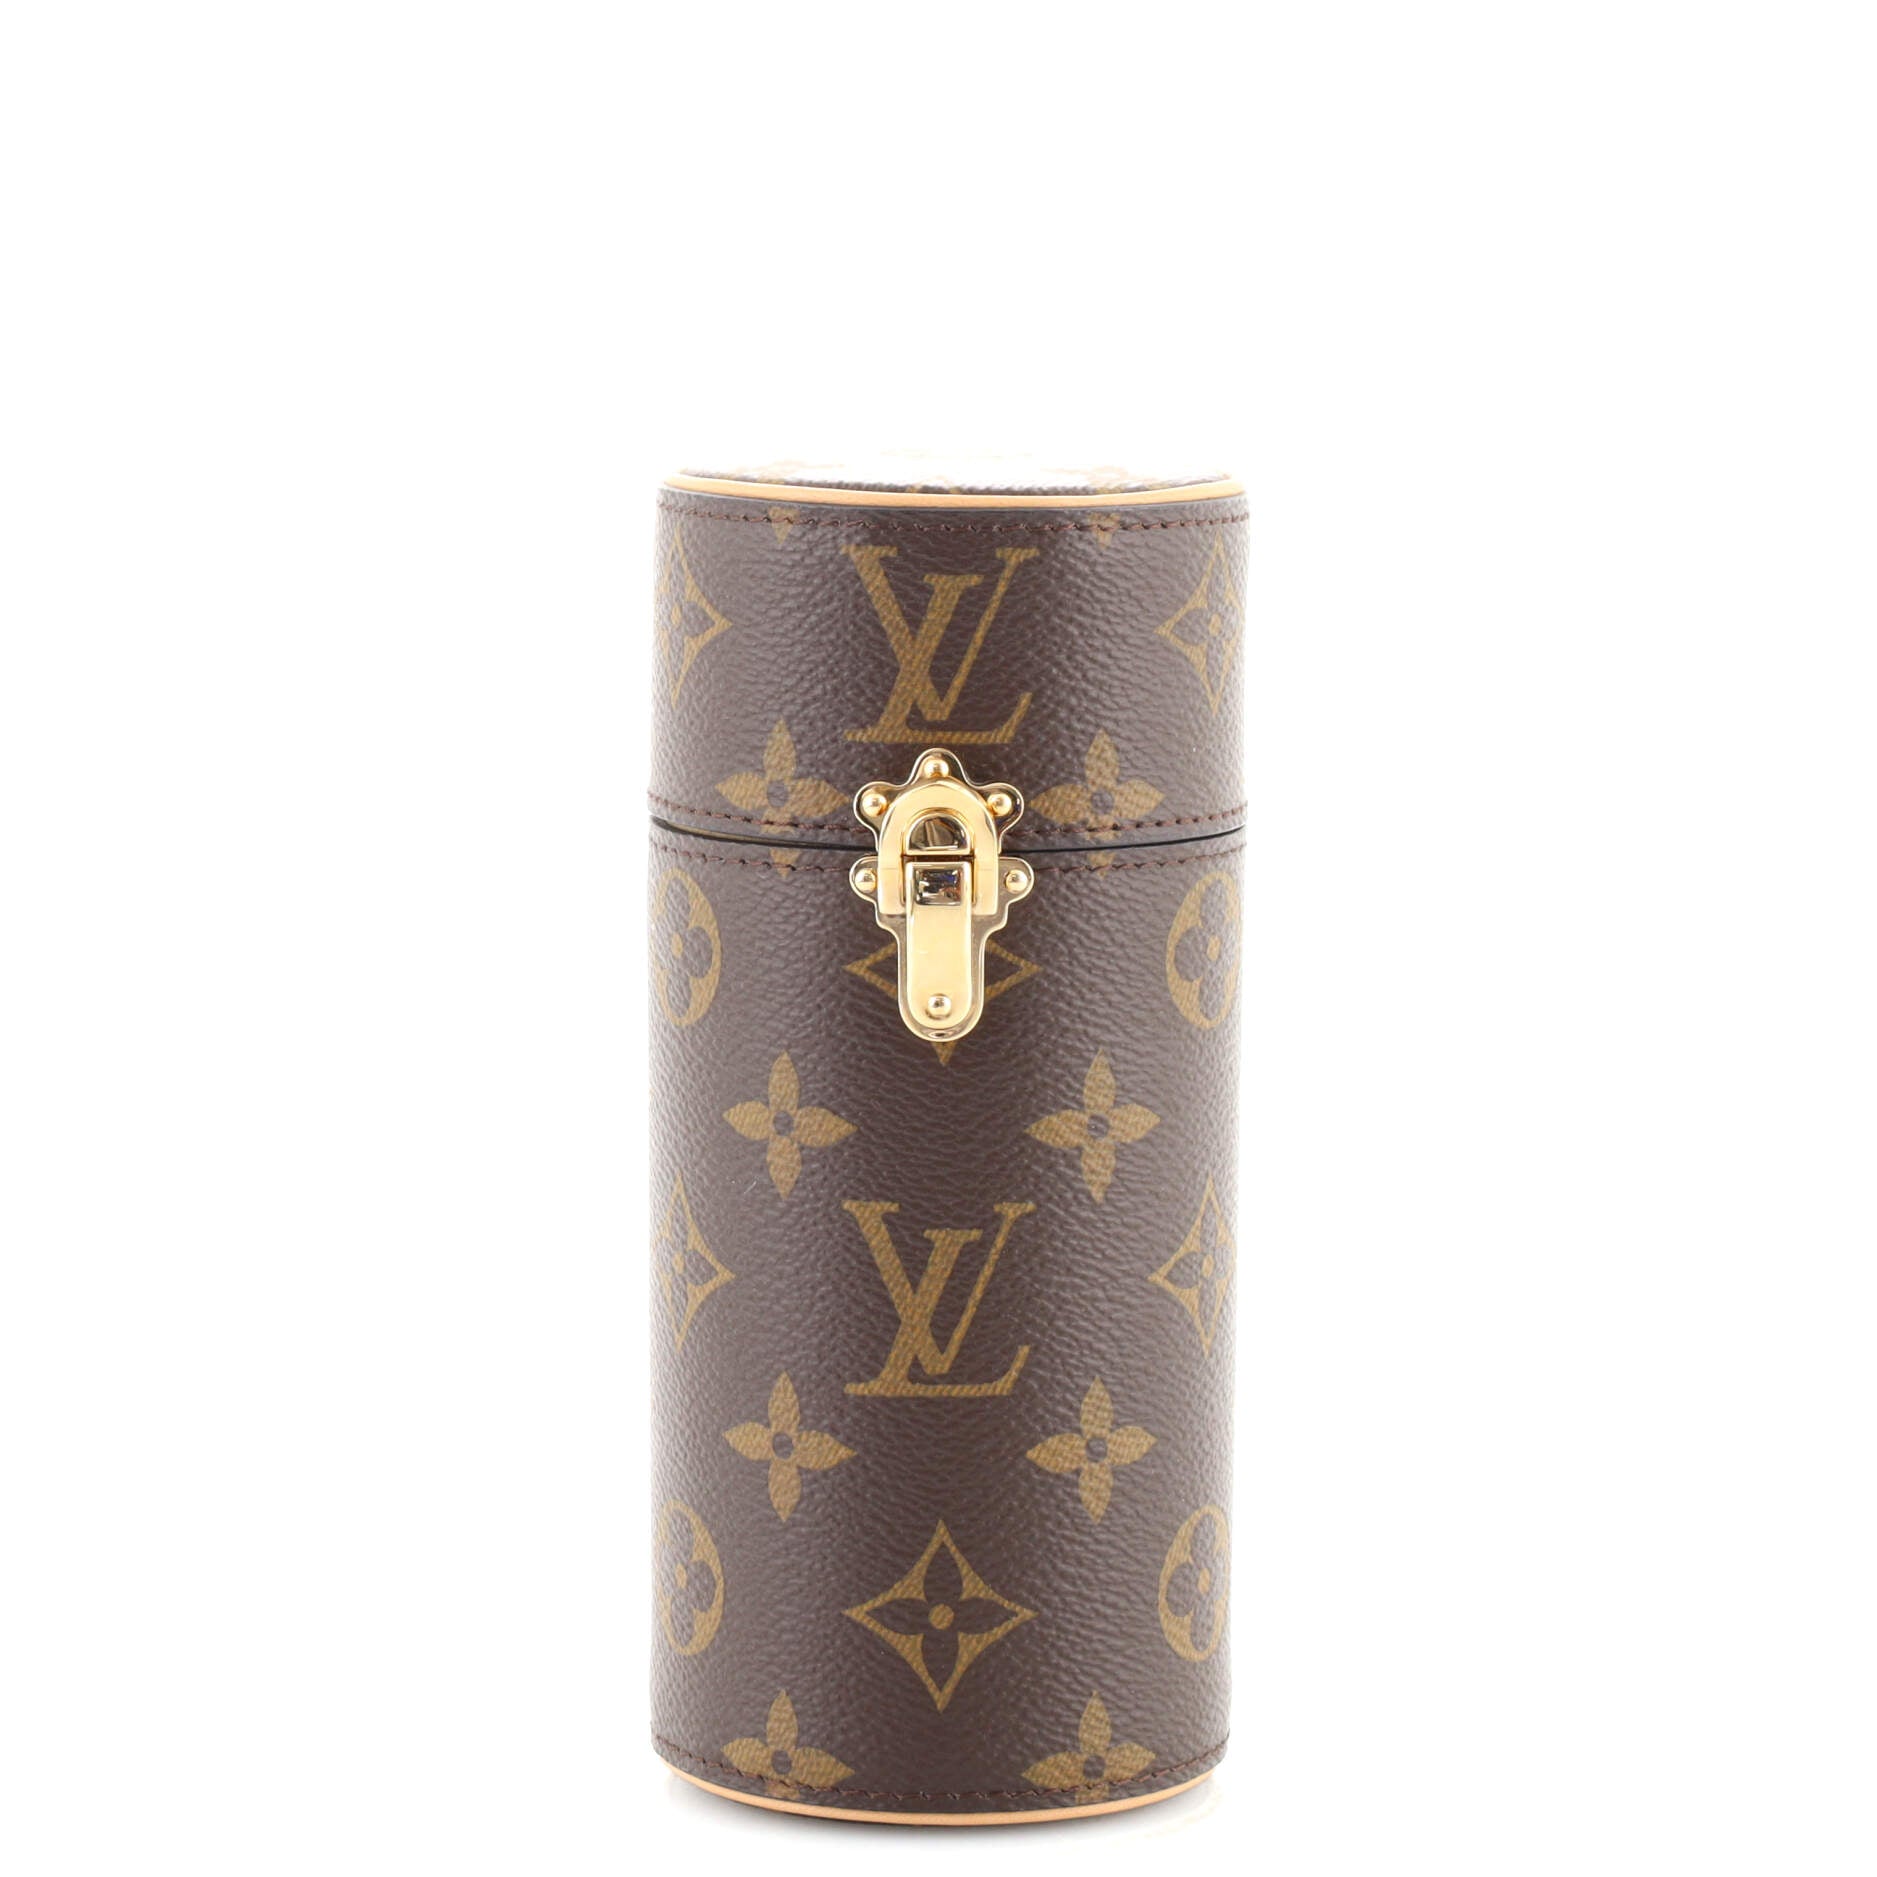 Travel case for Louis Vuitton perfume